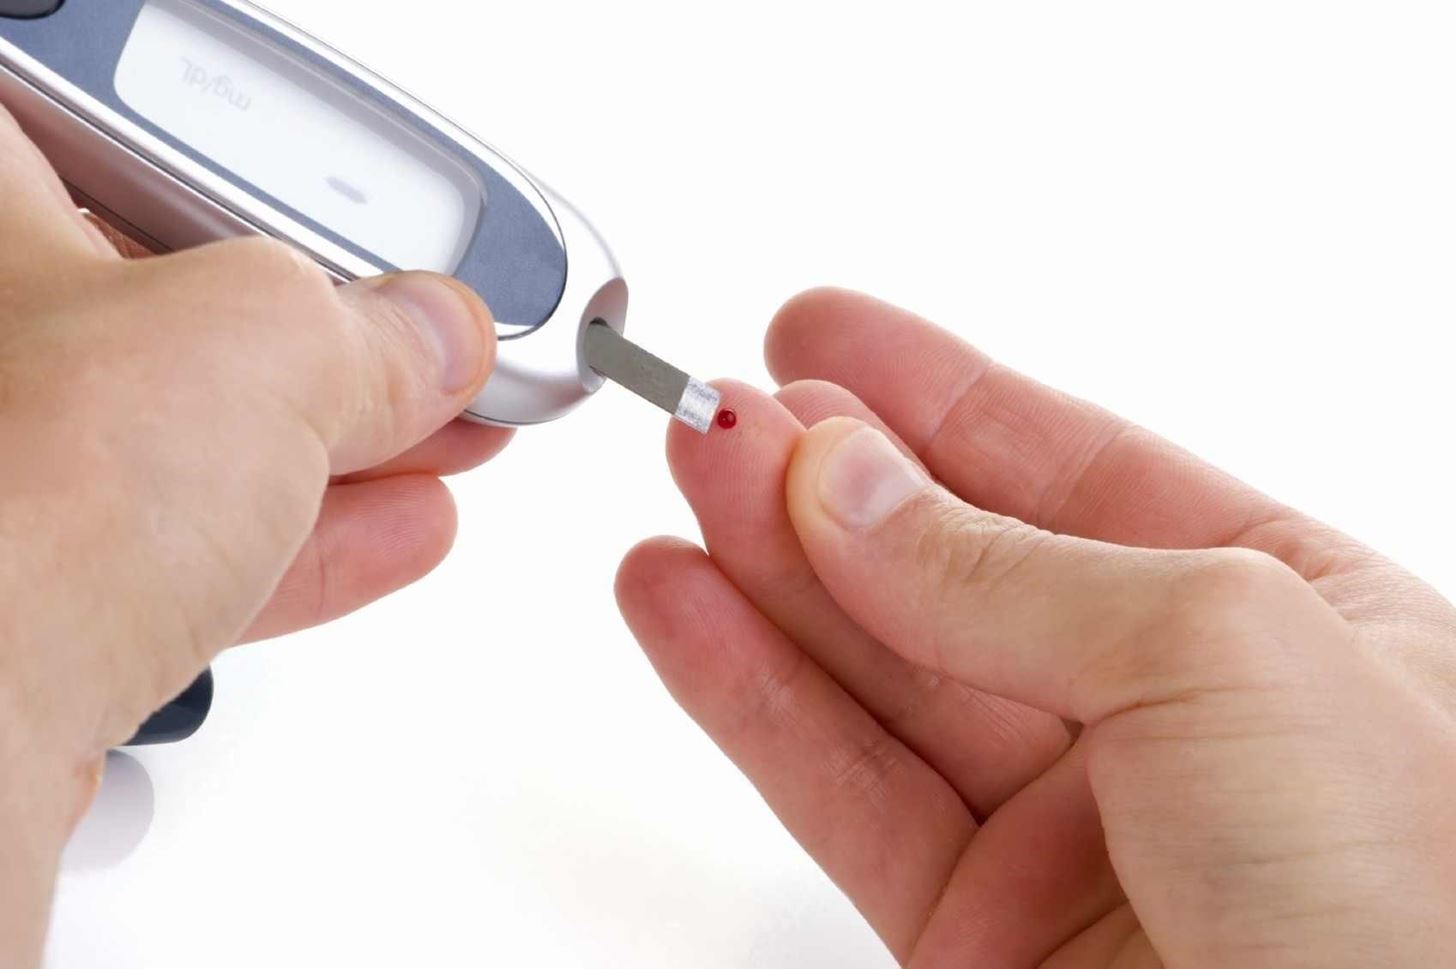 How to Avoid Diabetes